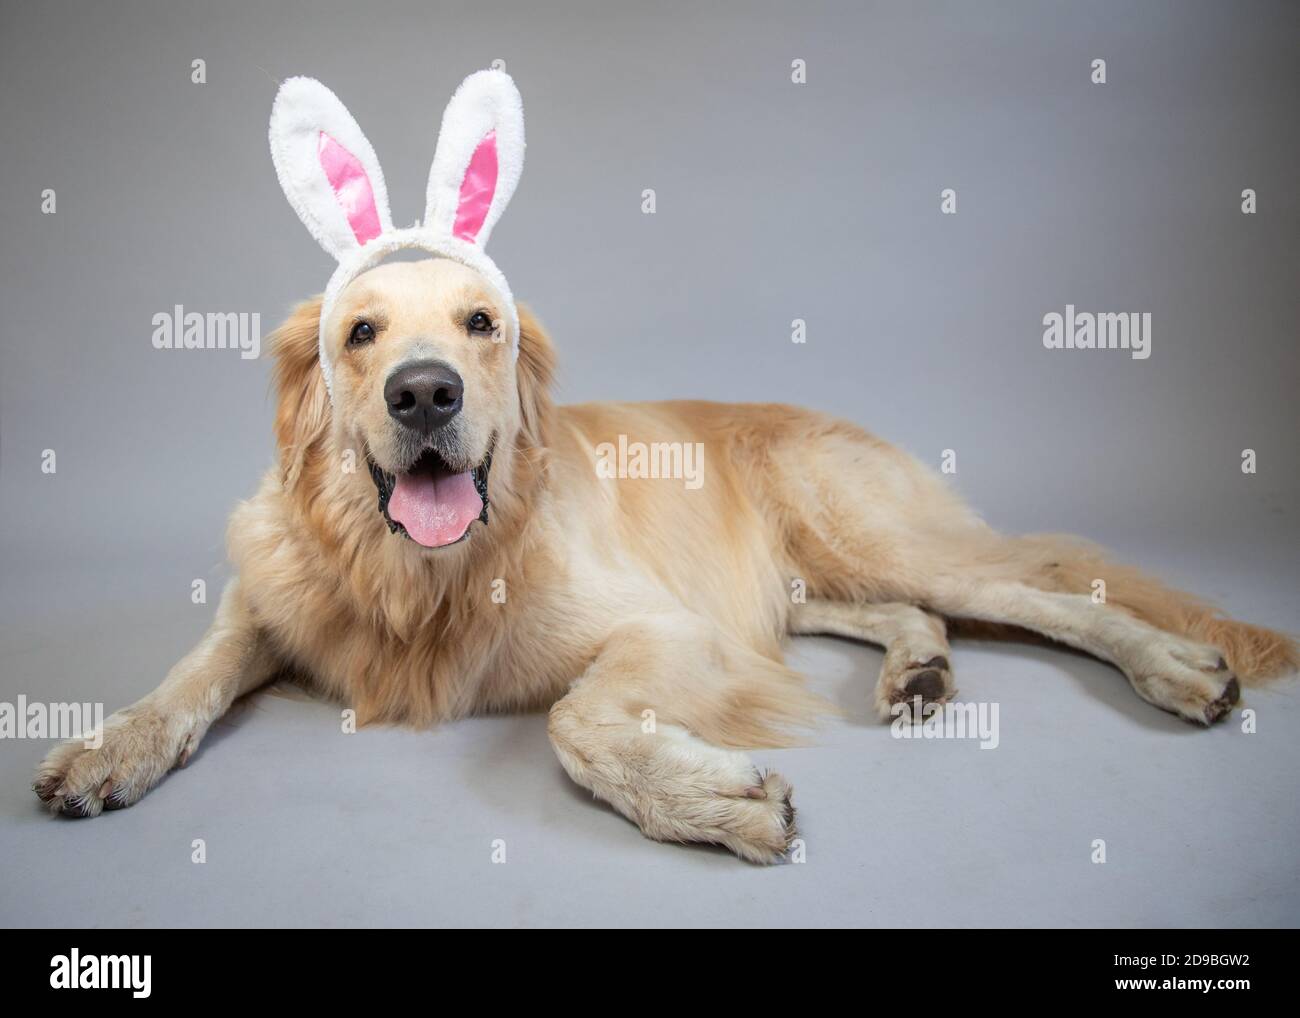 Portrait of a golden retriever wearing bunny ears Stock Photo